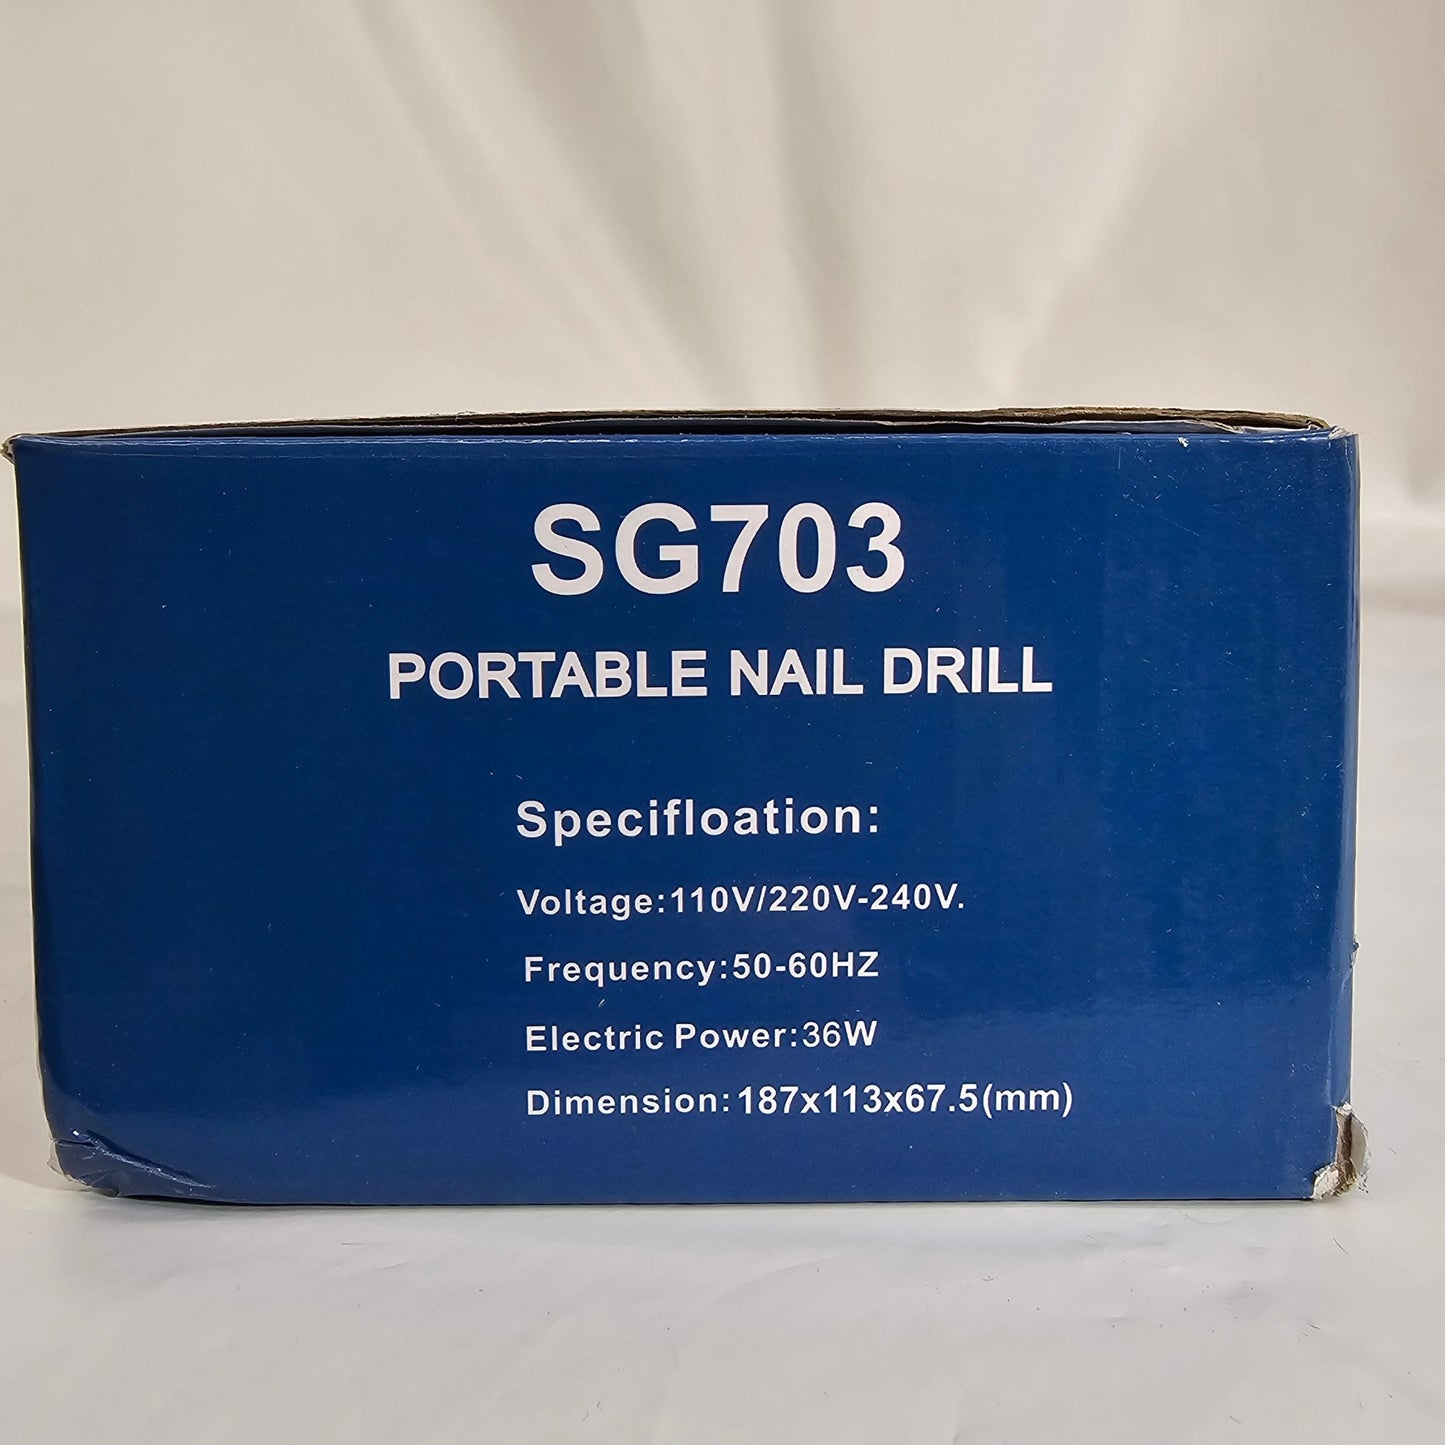 Portable Nail Drill SG703-PINK-1 - DQ Distribution